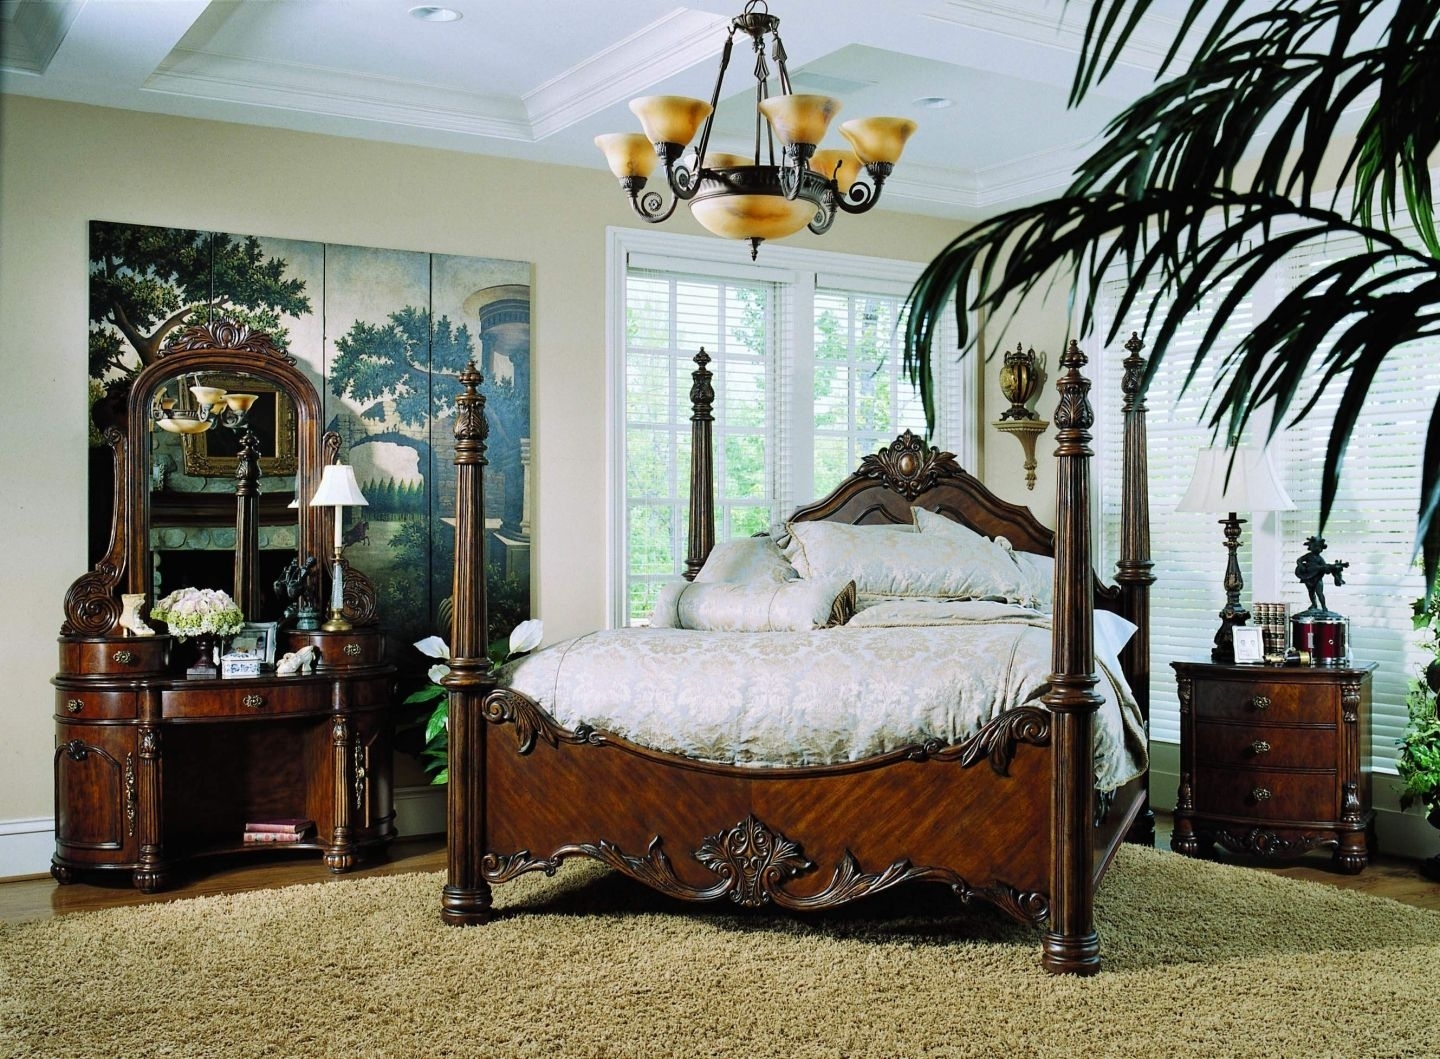 pulaski arabella bedroom furniture collection